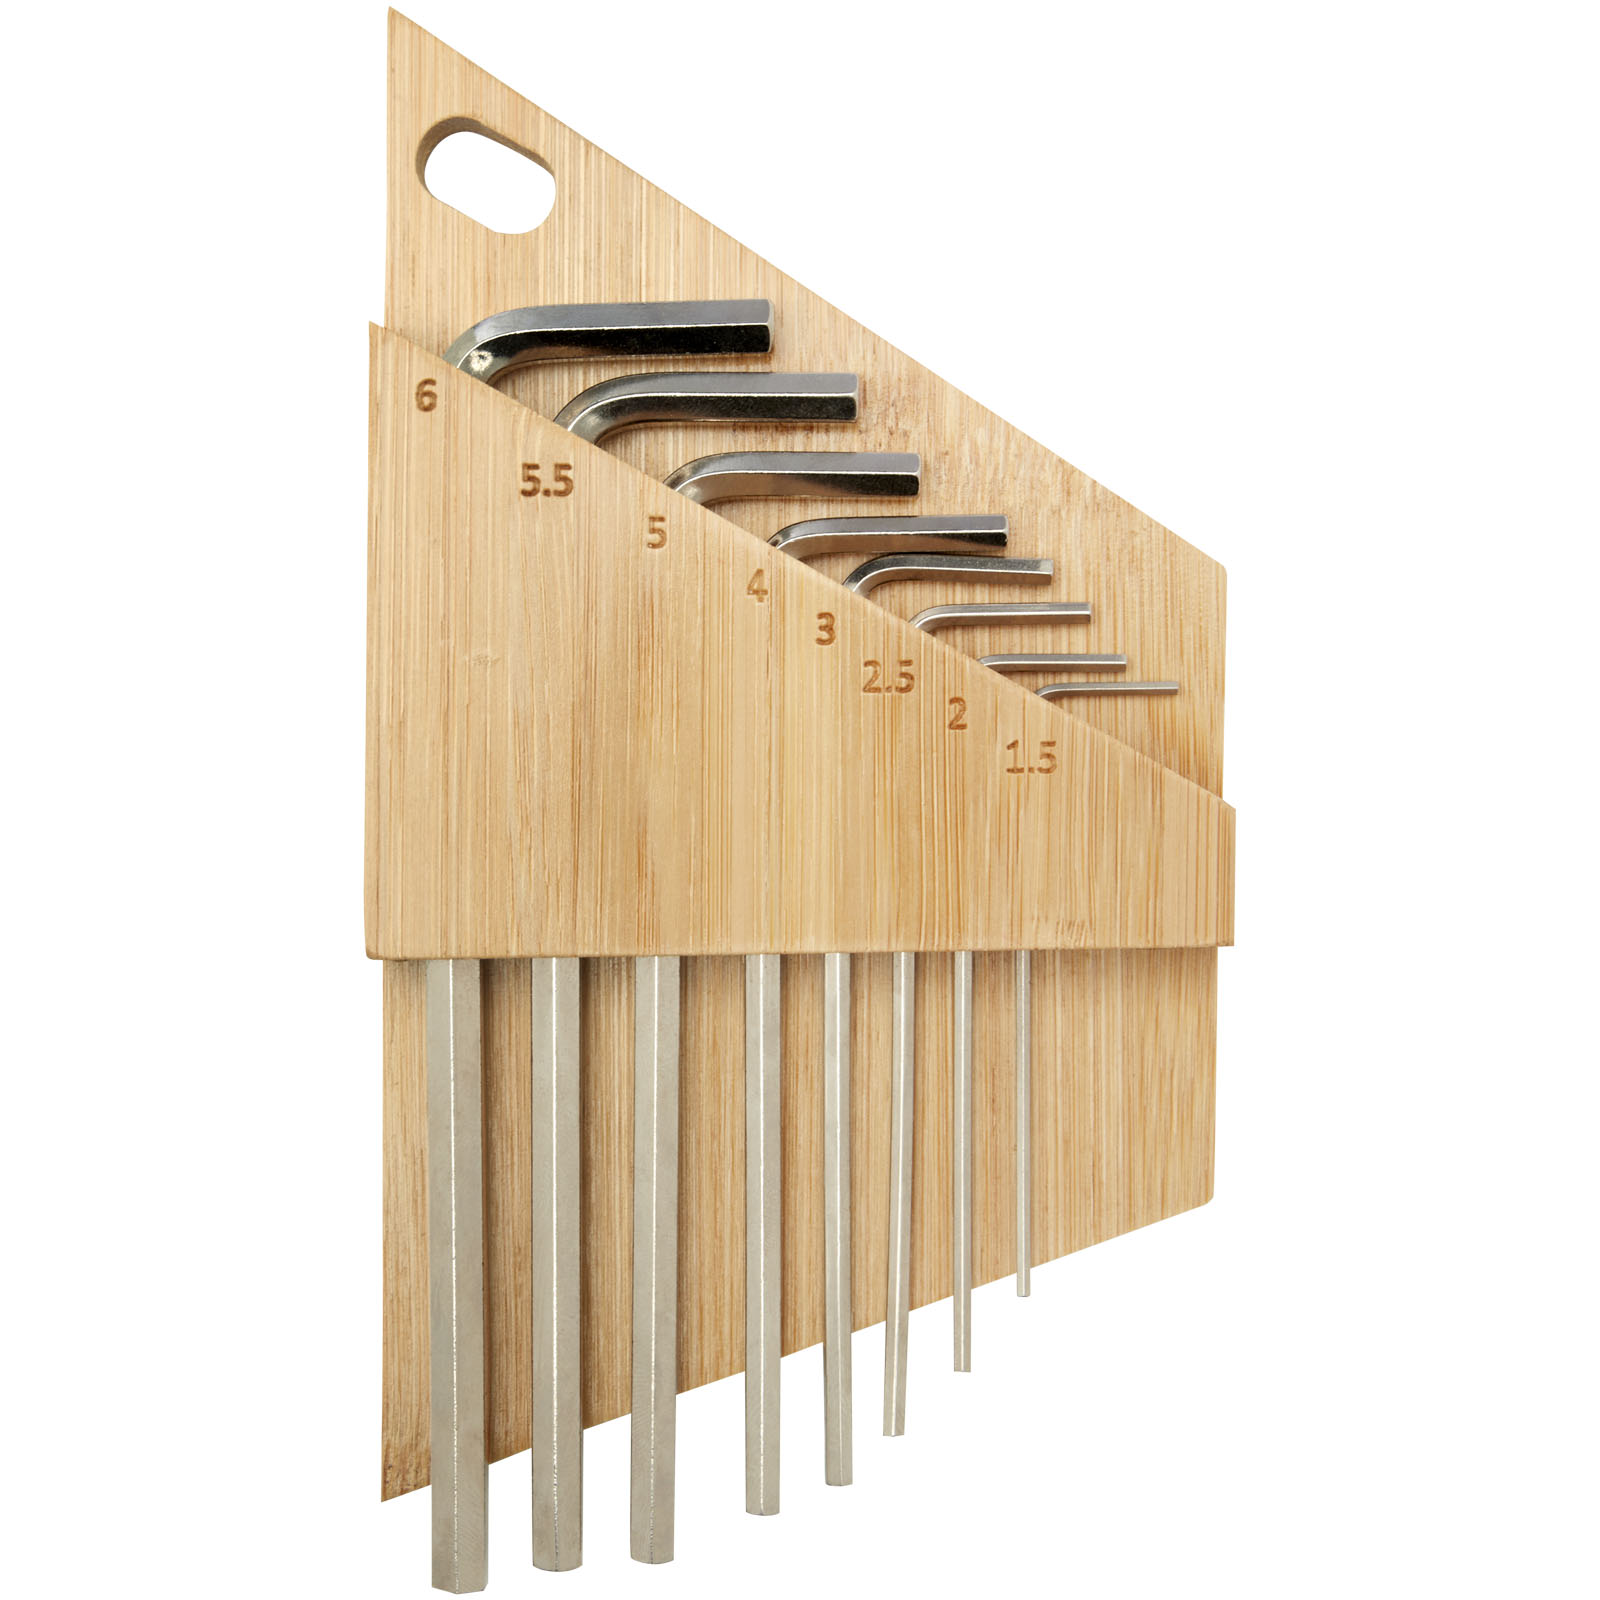 Advertising Tool sets - Allen bamboo hex key tool set - 2